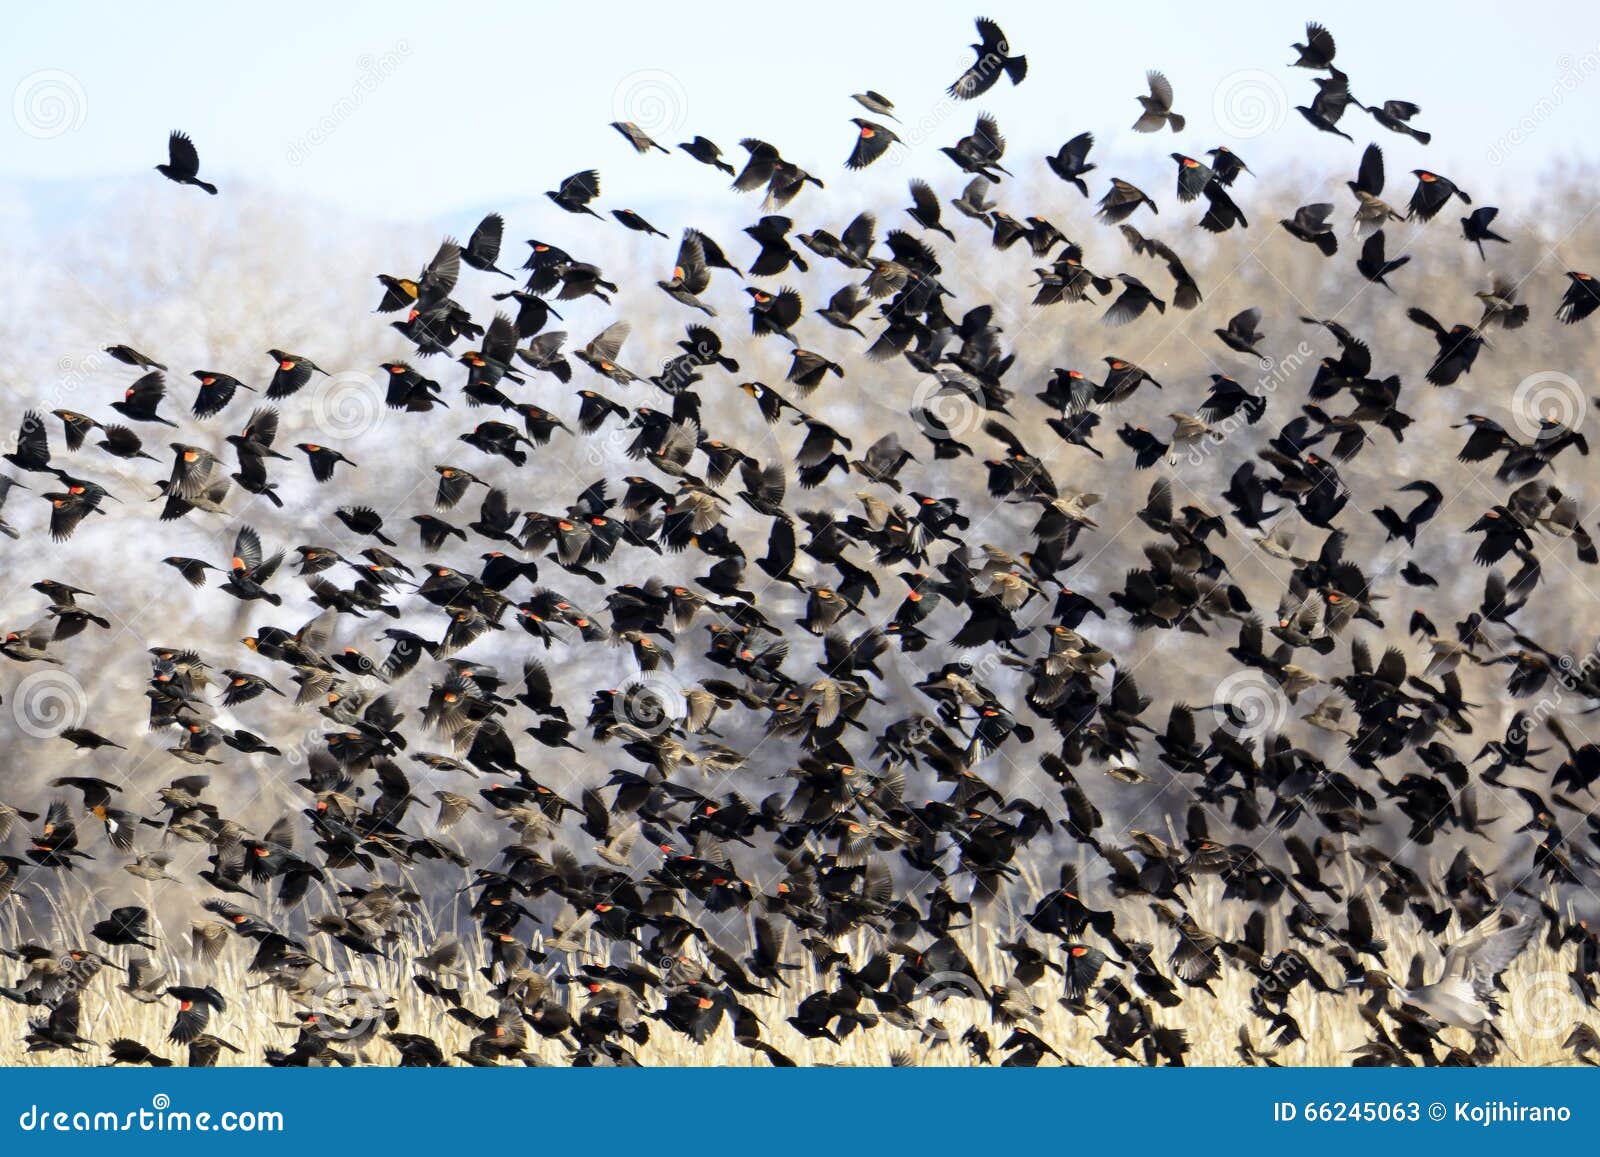 flock of blackbirds flying